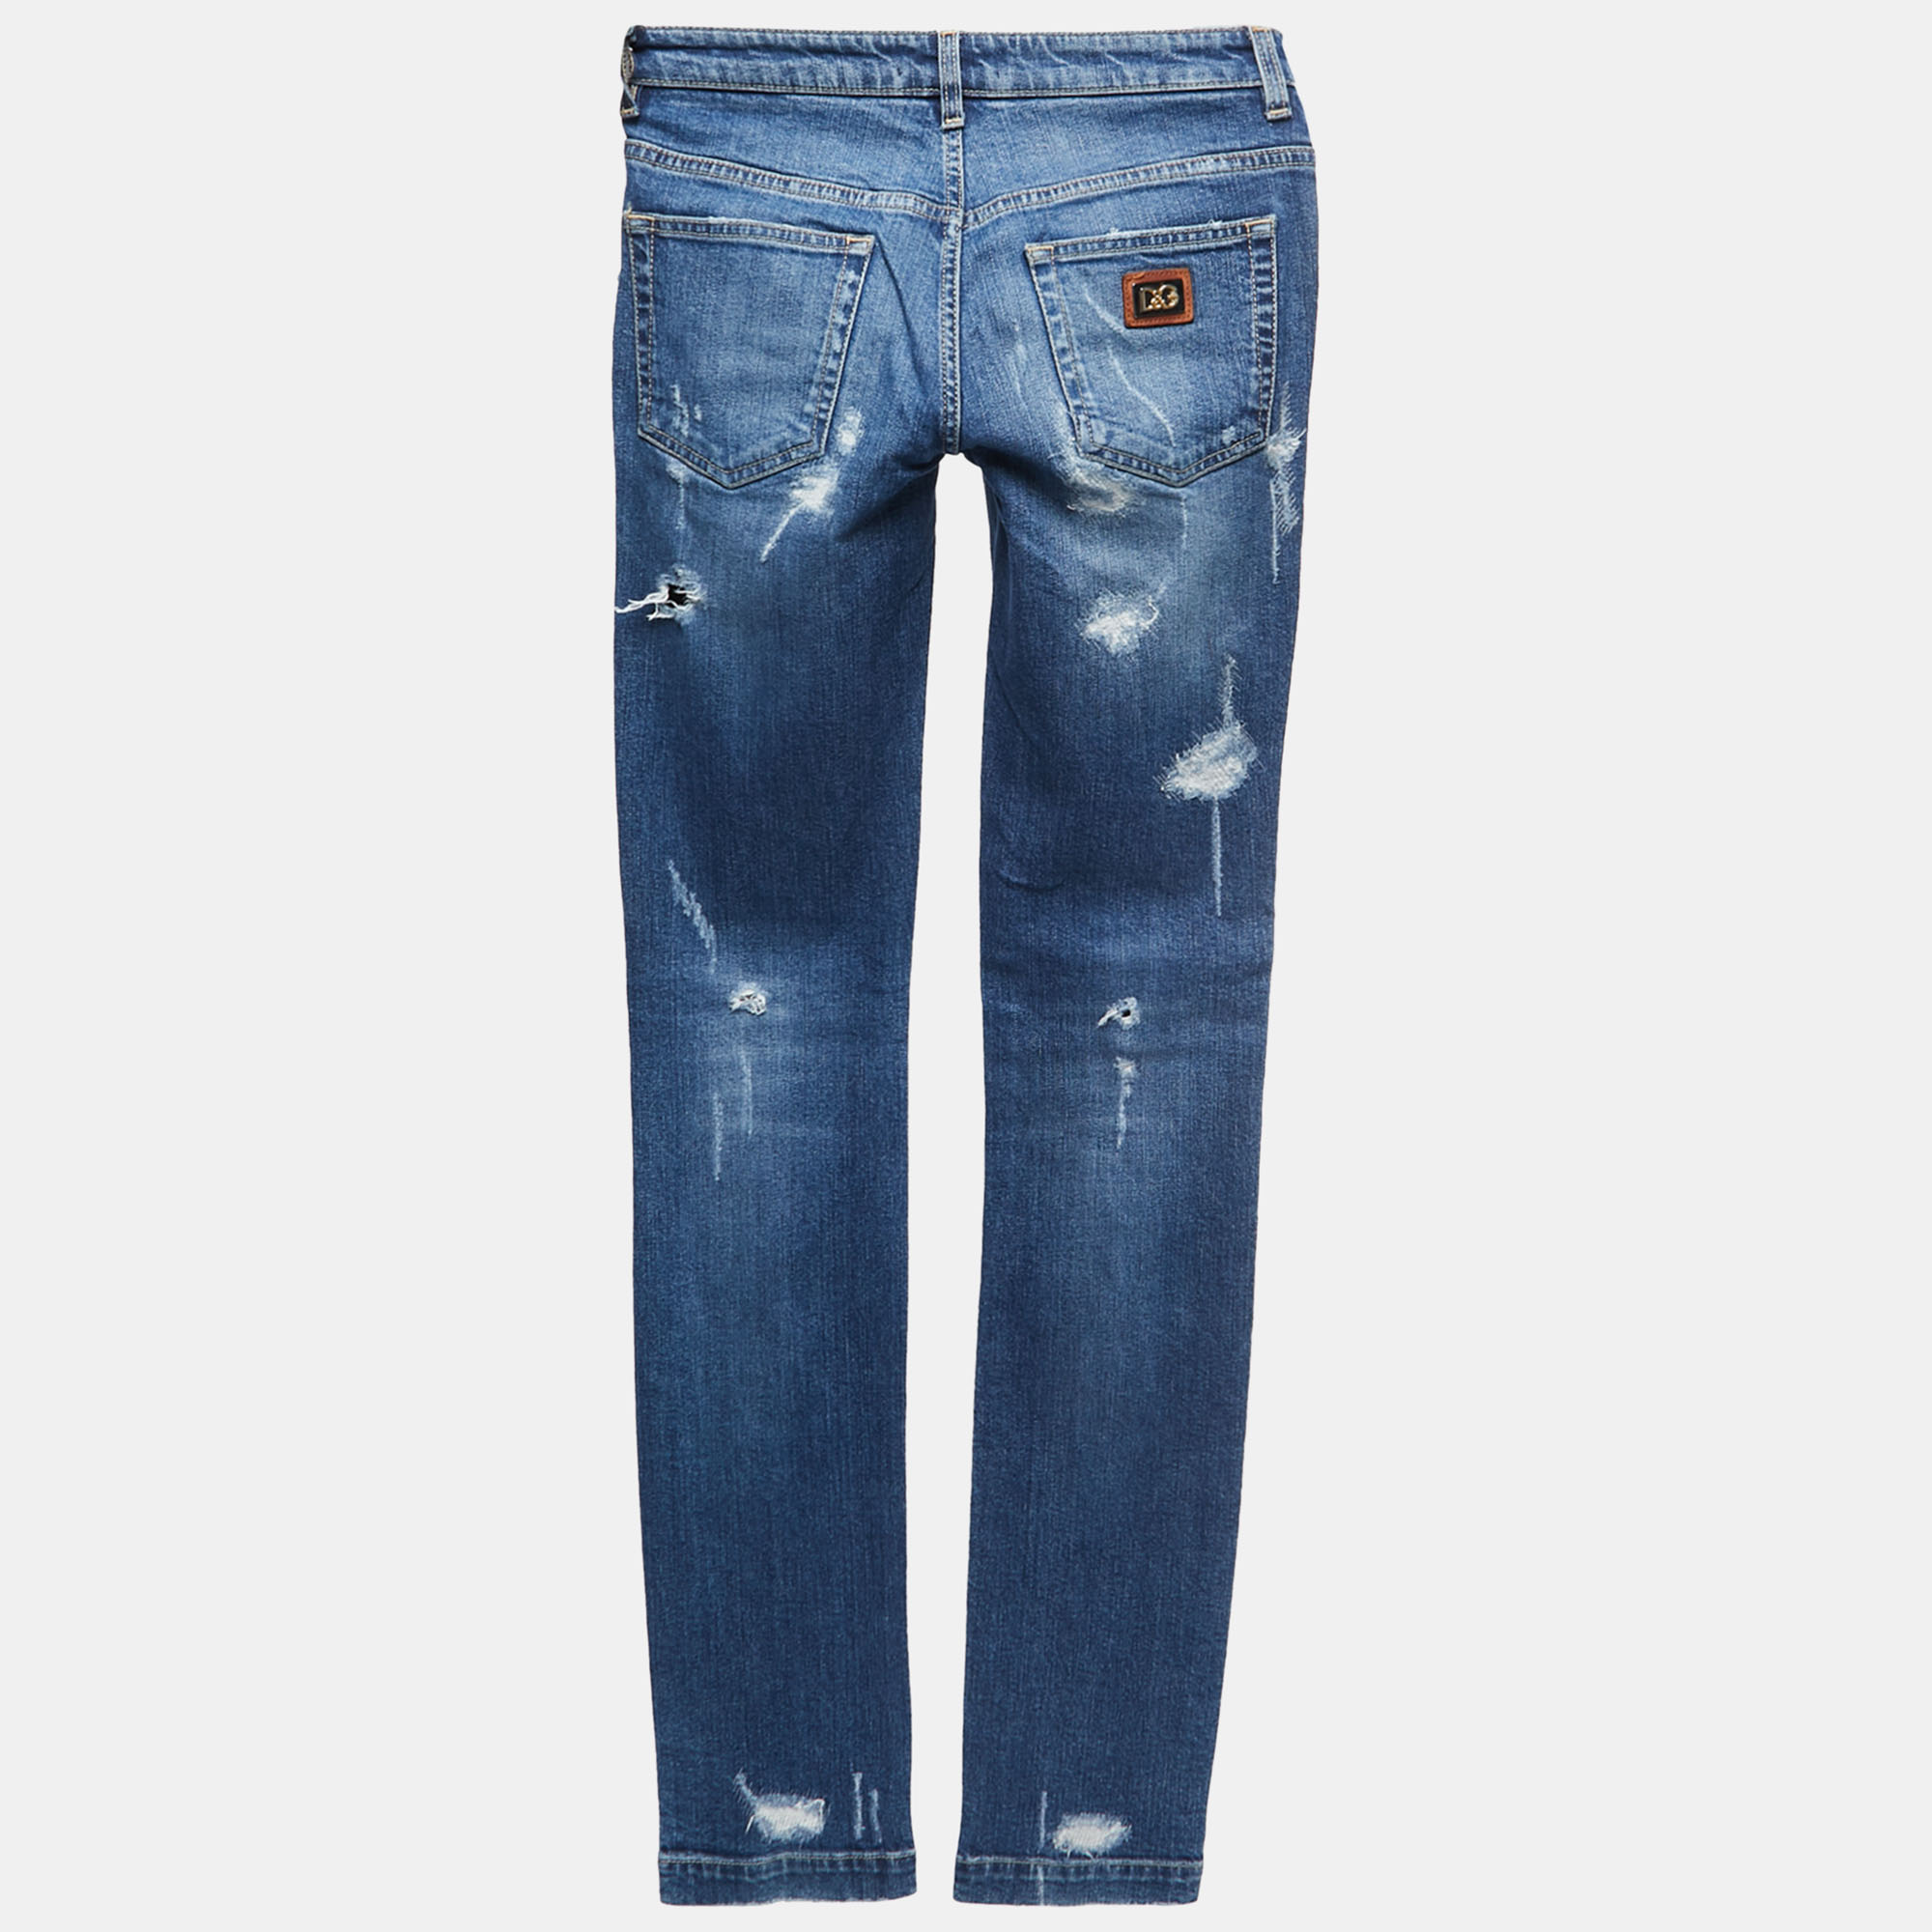 

Dolce & Gabbana Blue Washed & Ripped Denim Jeans  Waist 26